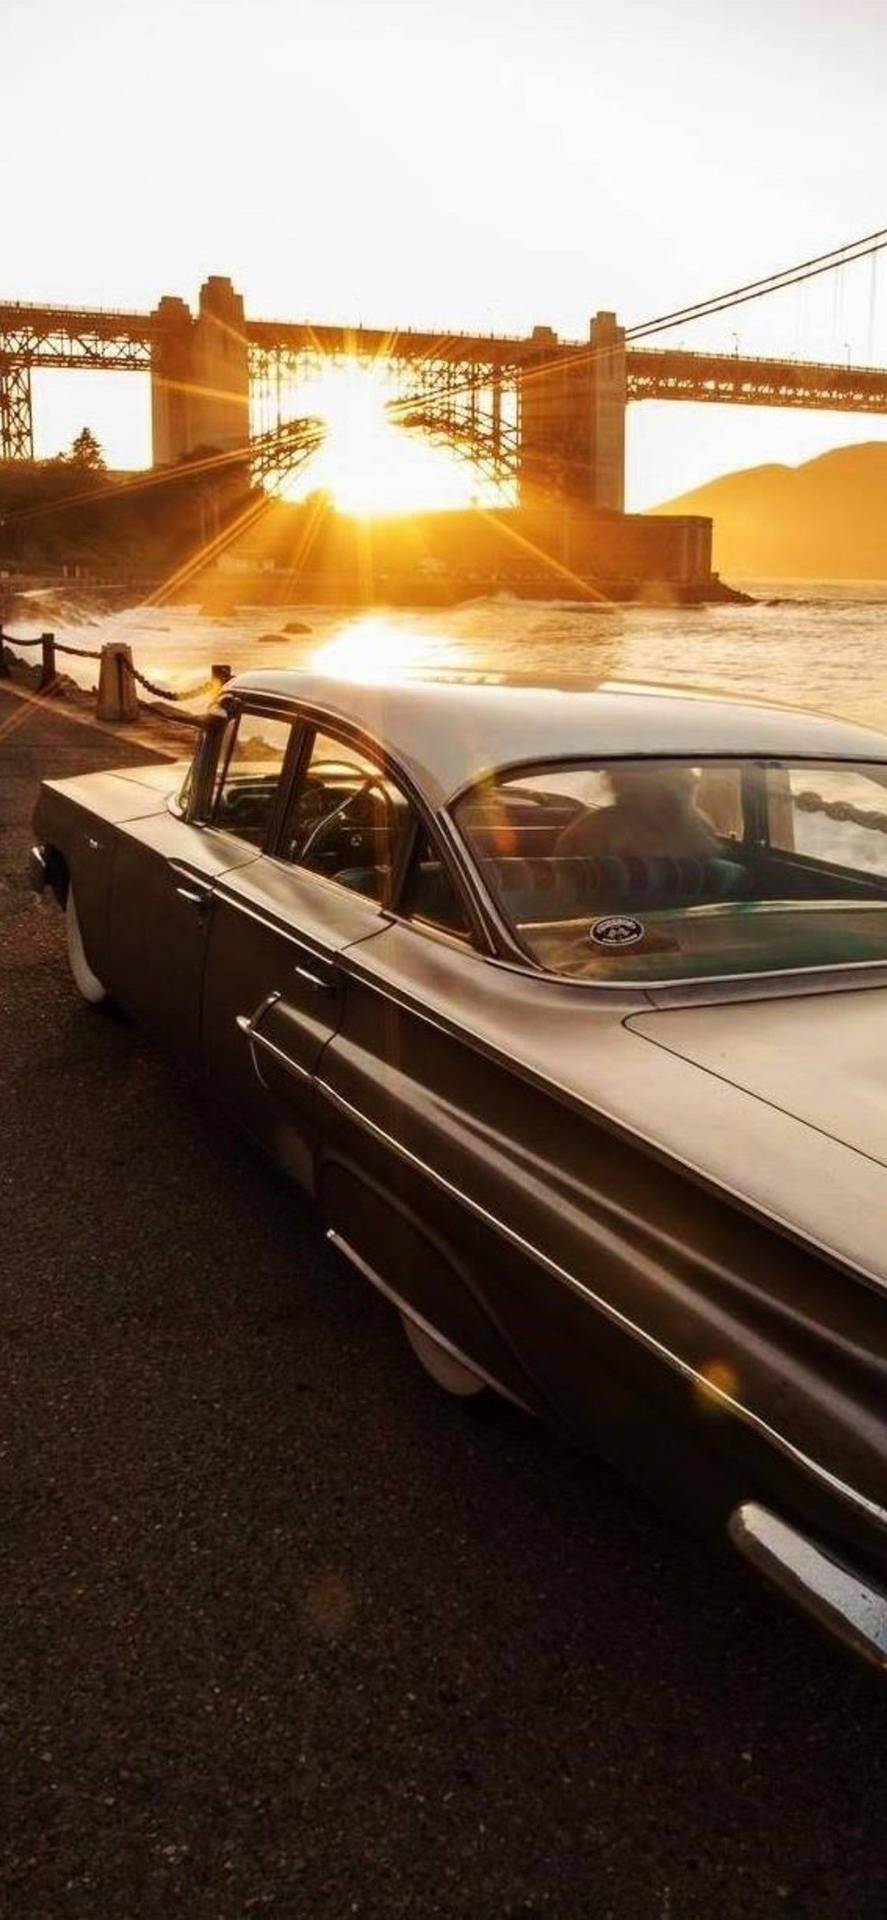 Vertical Vintage Cadillac Sunset